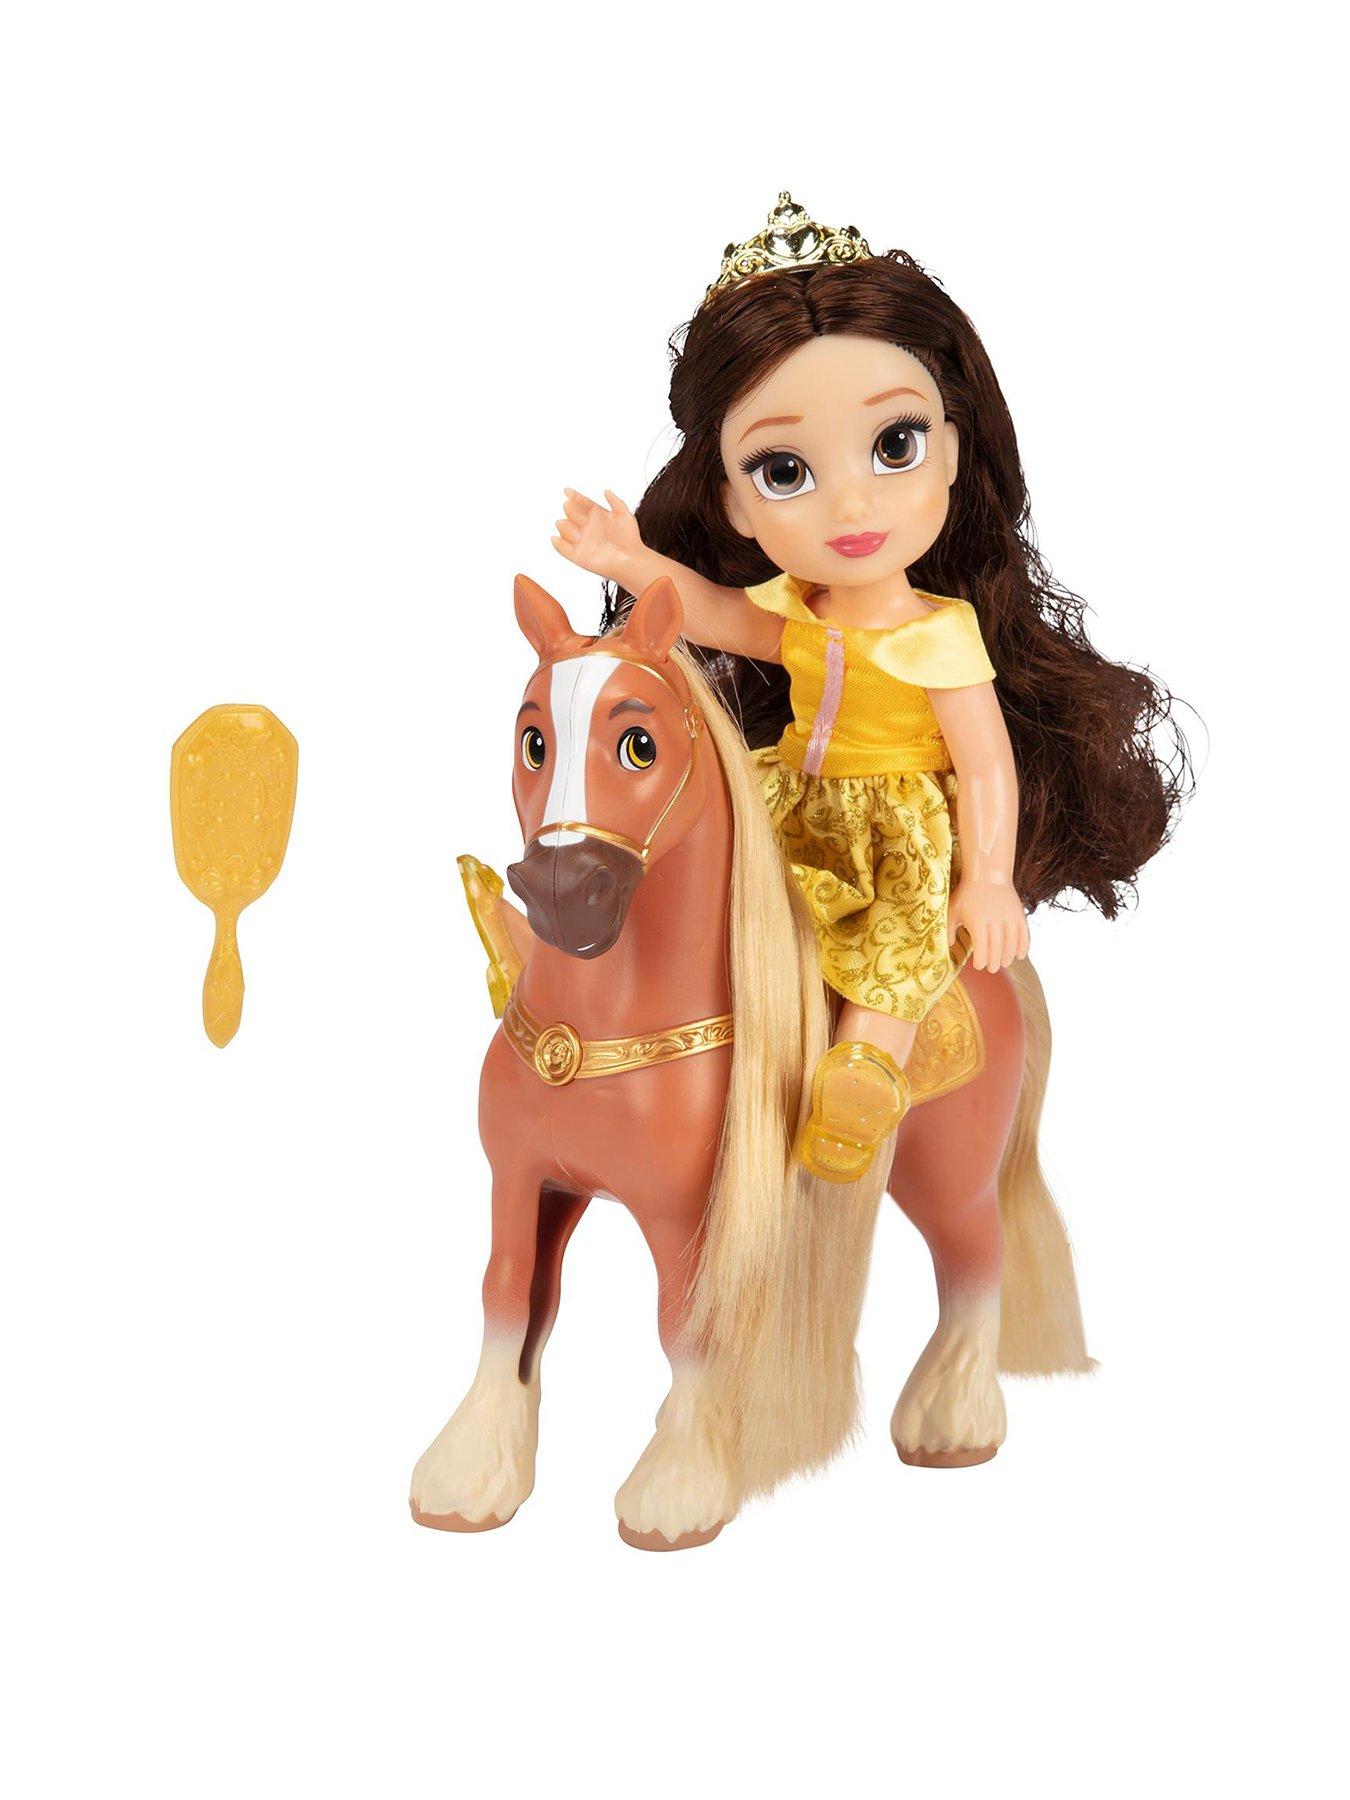 Disney Princess Merchandise  Disney Princess Store Online at